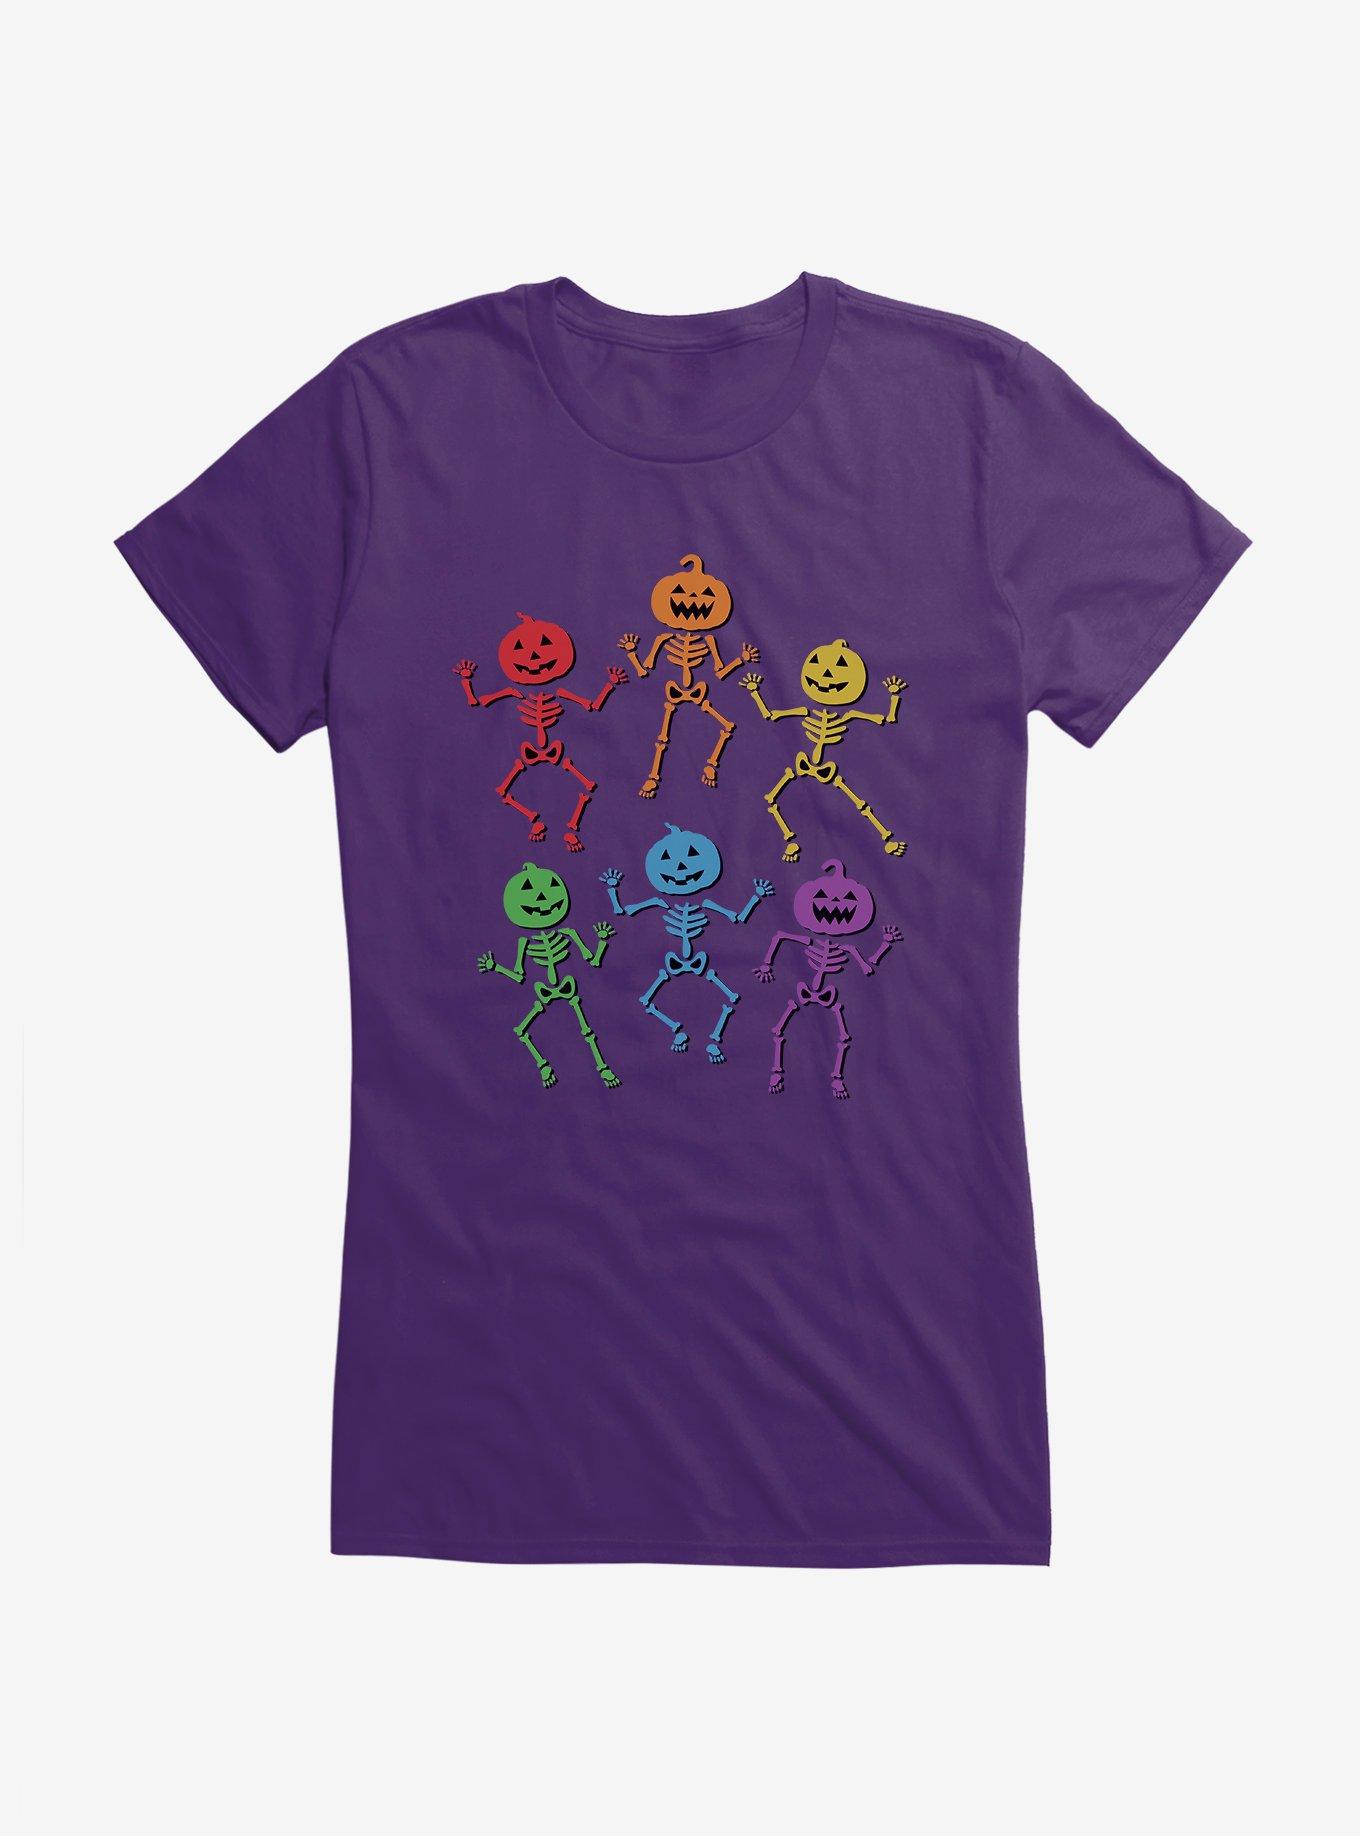 Hot Topic Rainbow Skeletons Girls T-Shirt